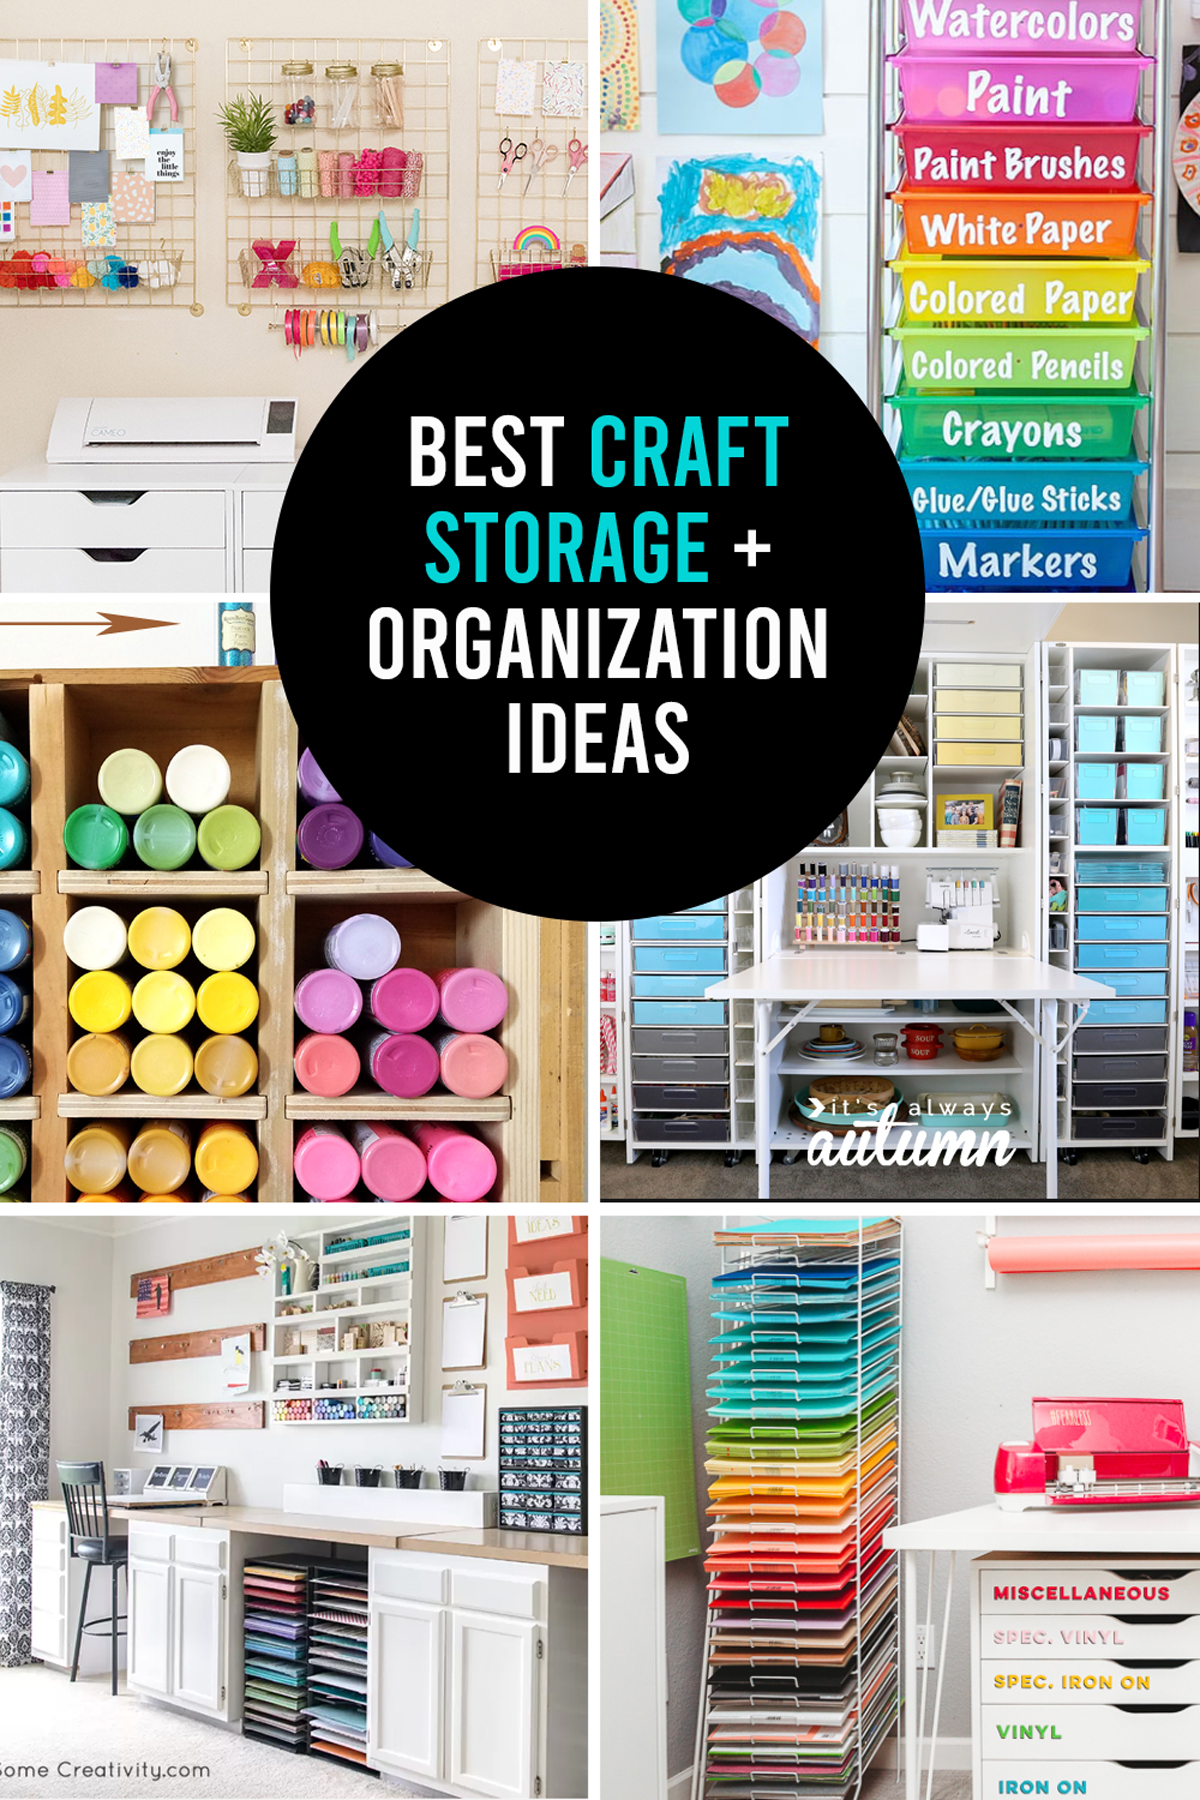 Collage photo showing best craft storage and organization ideas